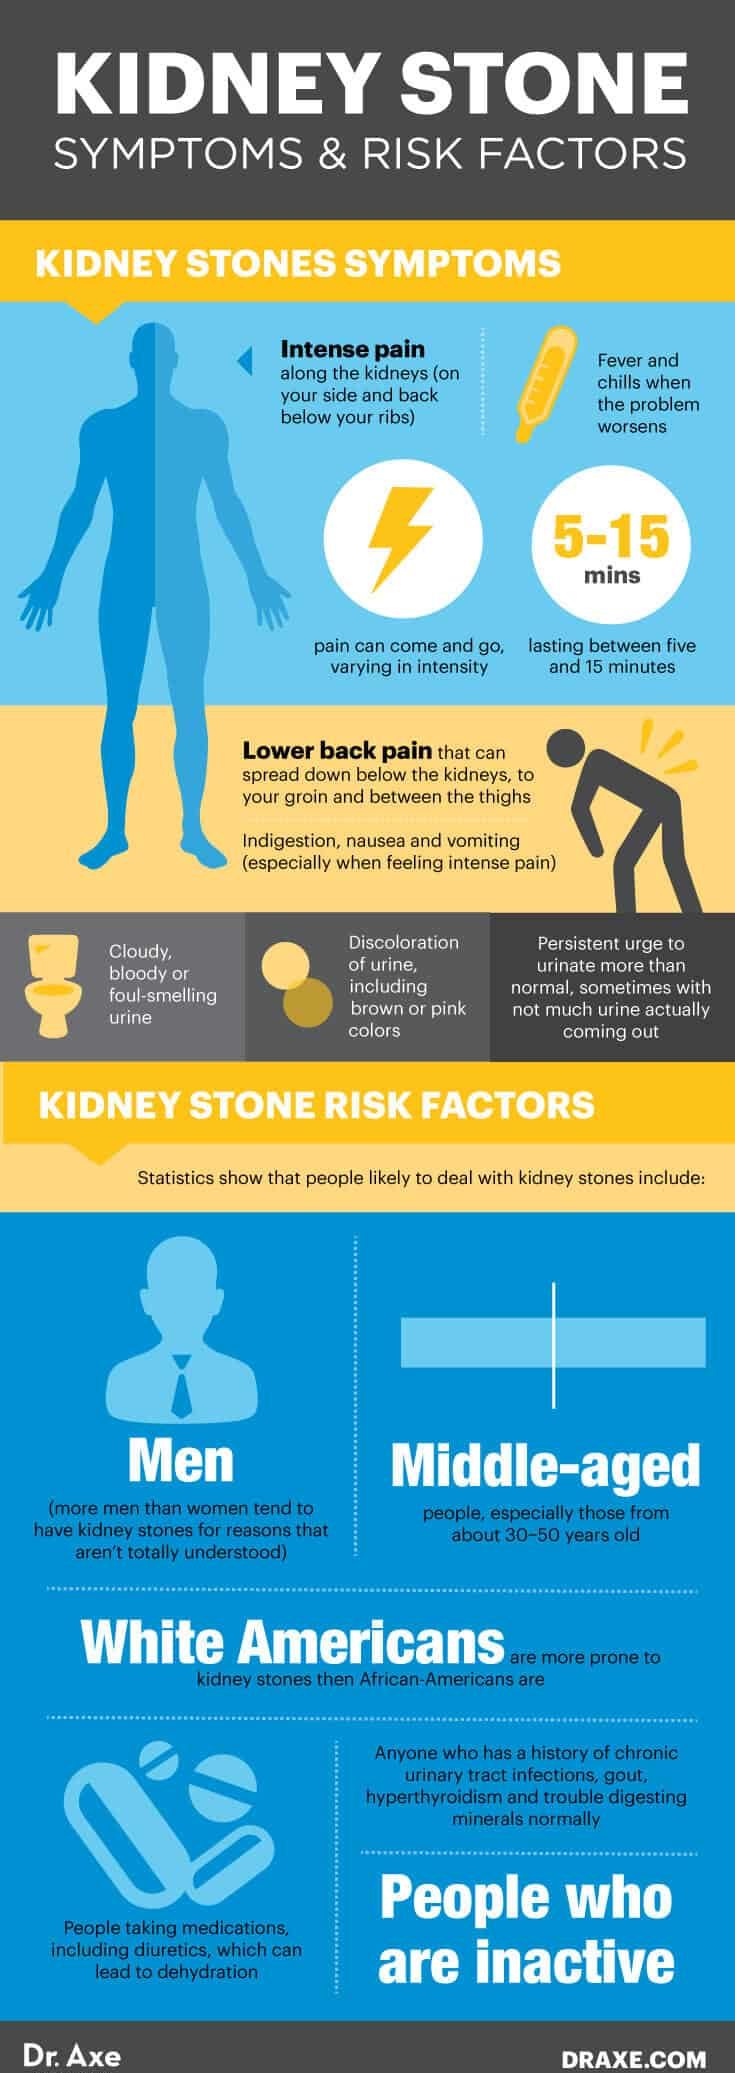 Kidney stone symptoms & risk factors - Dr. Axe